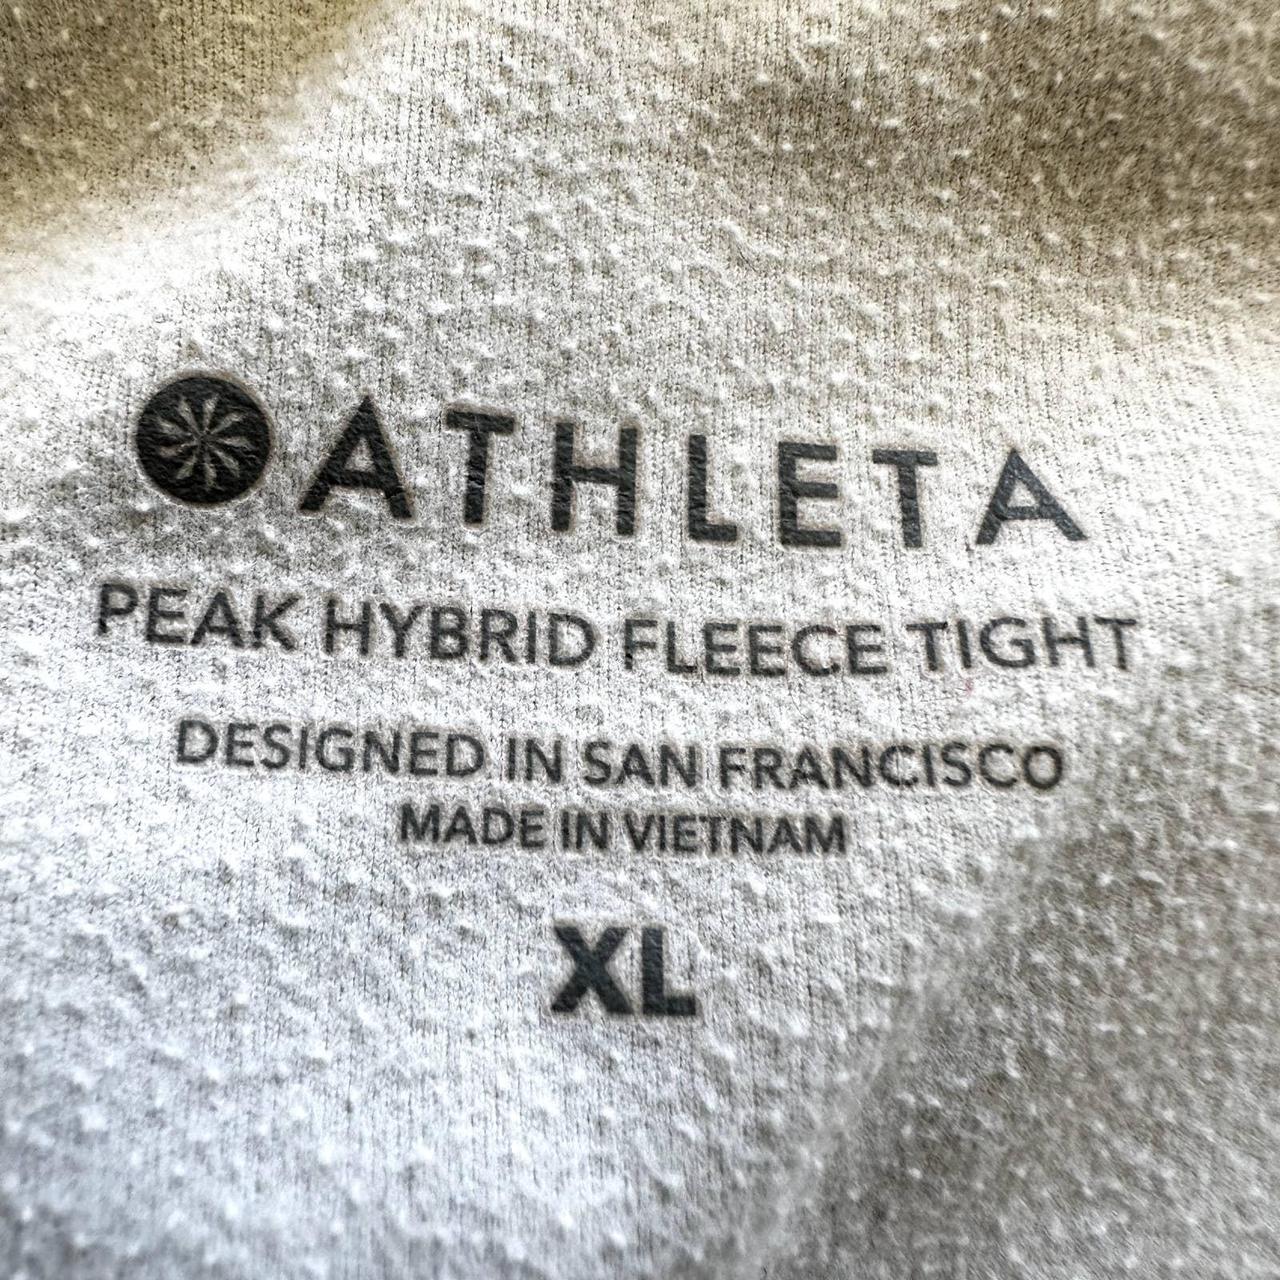 Athleta Peak Hybrid Fleece Tight in Birch Grey - Depop